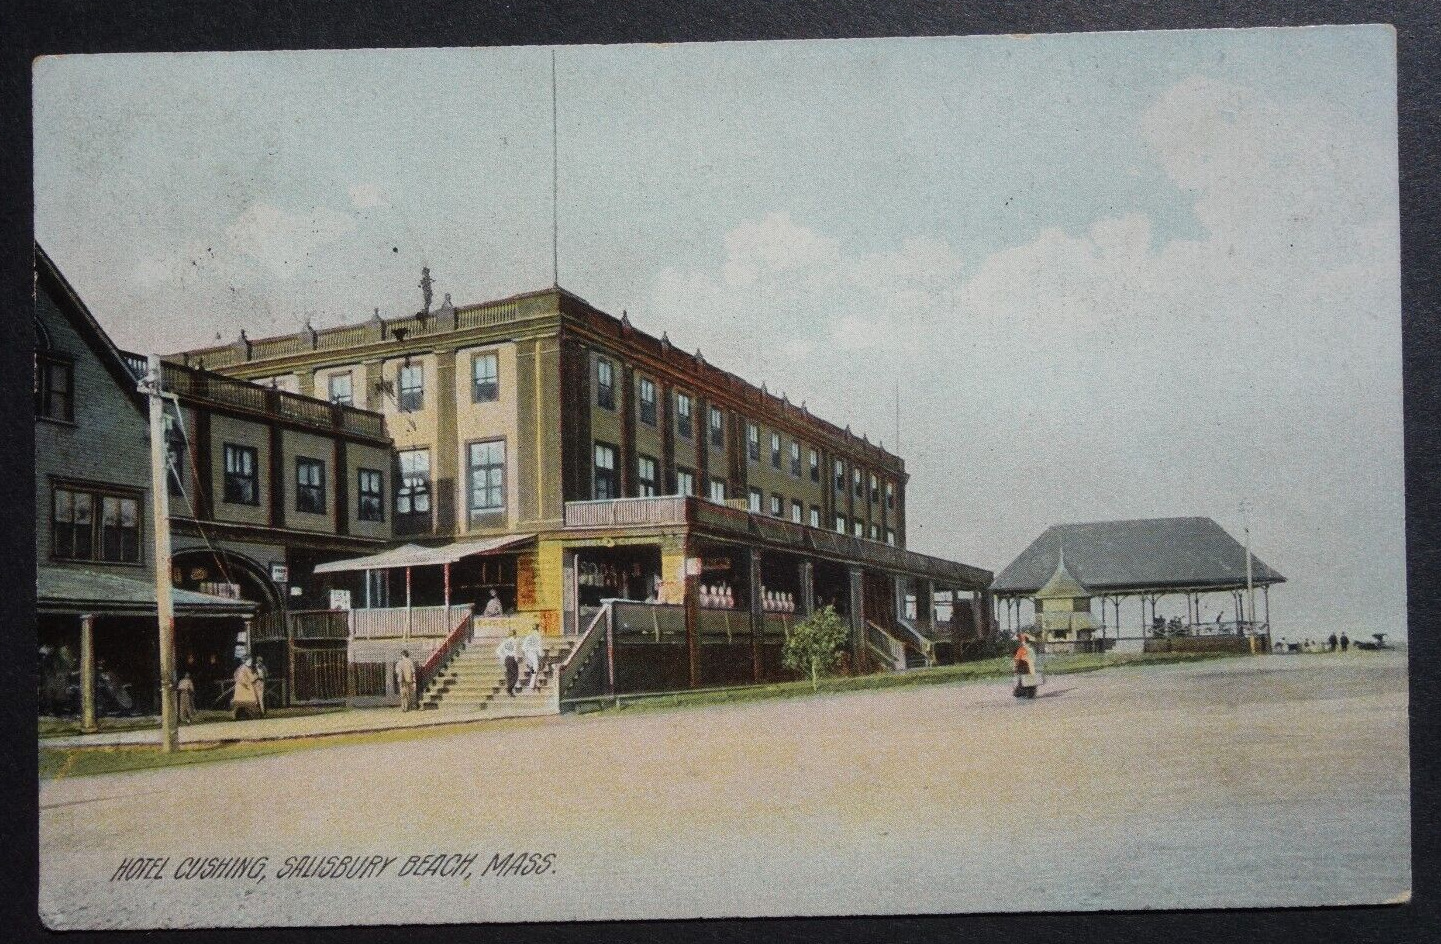 Hotel Cushing, Salisbury Beach MA Mass Rotograph postcard